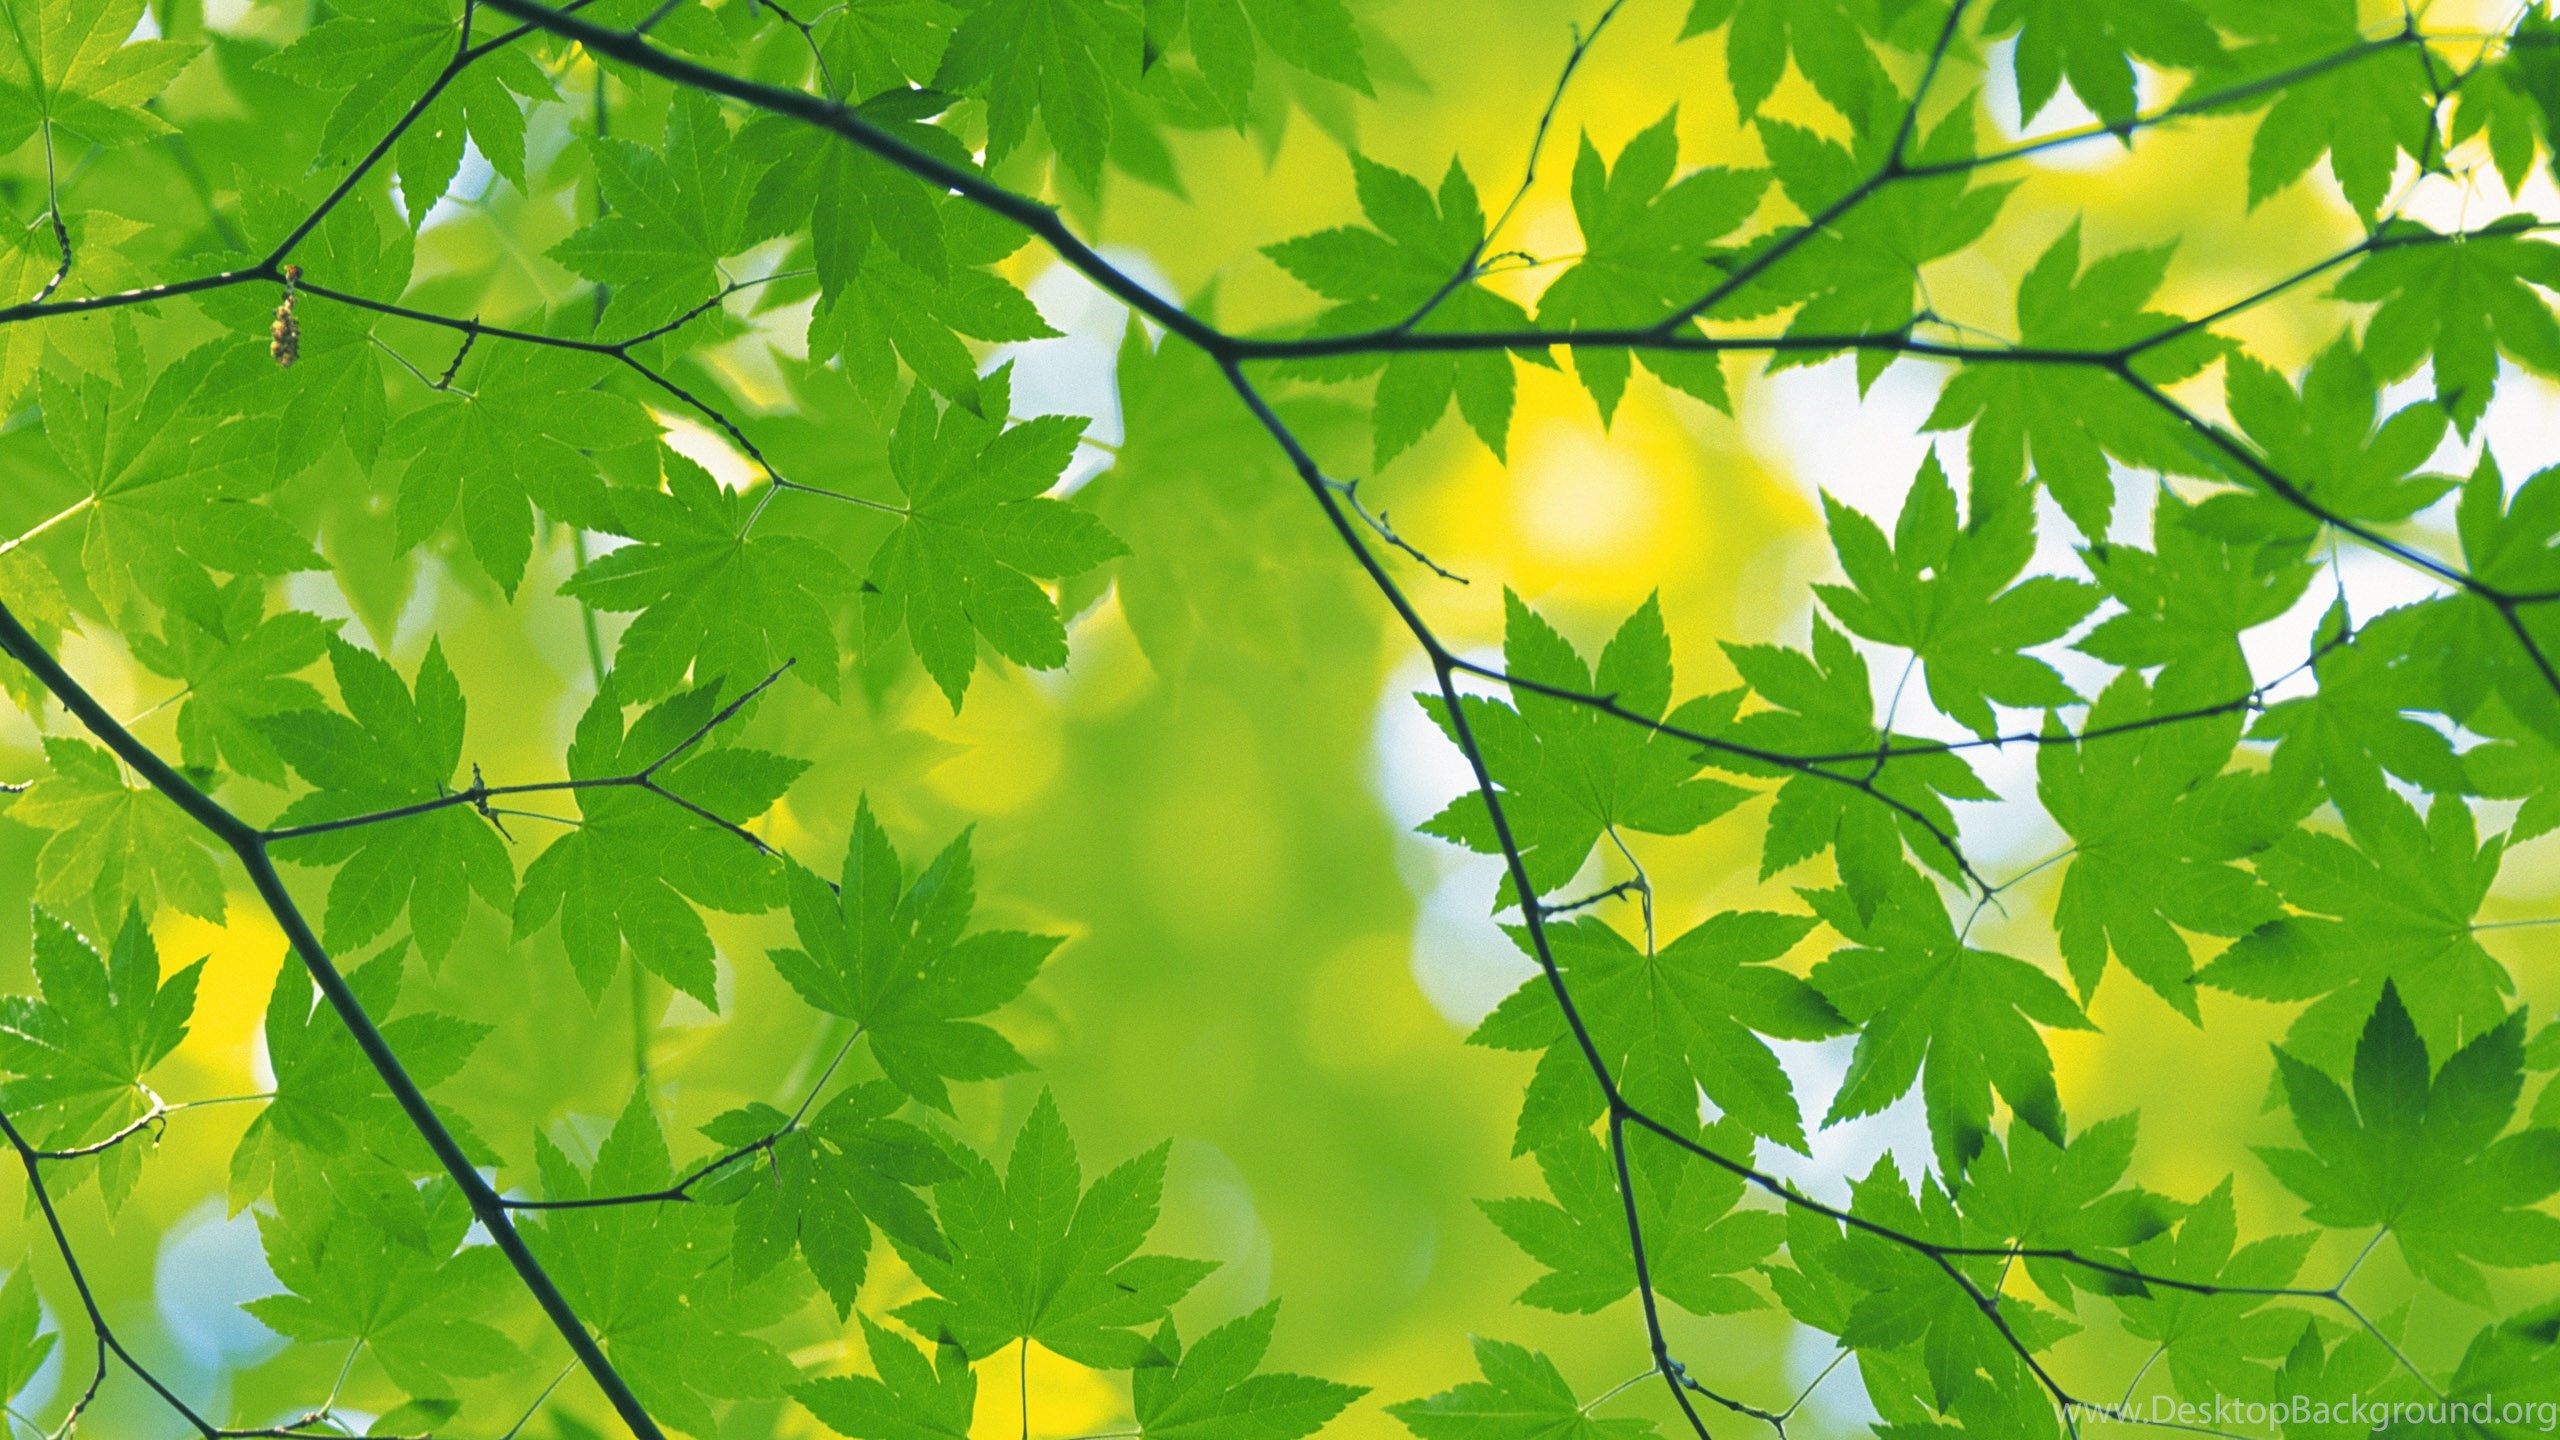 HD Best Green Autumn Leaves BAckground Wallpaper Full Size. Desktop Background